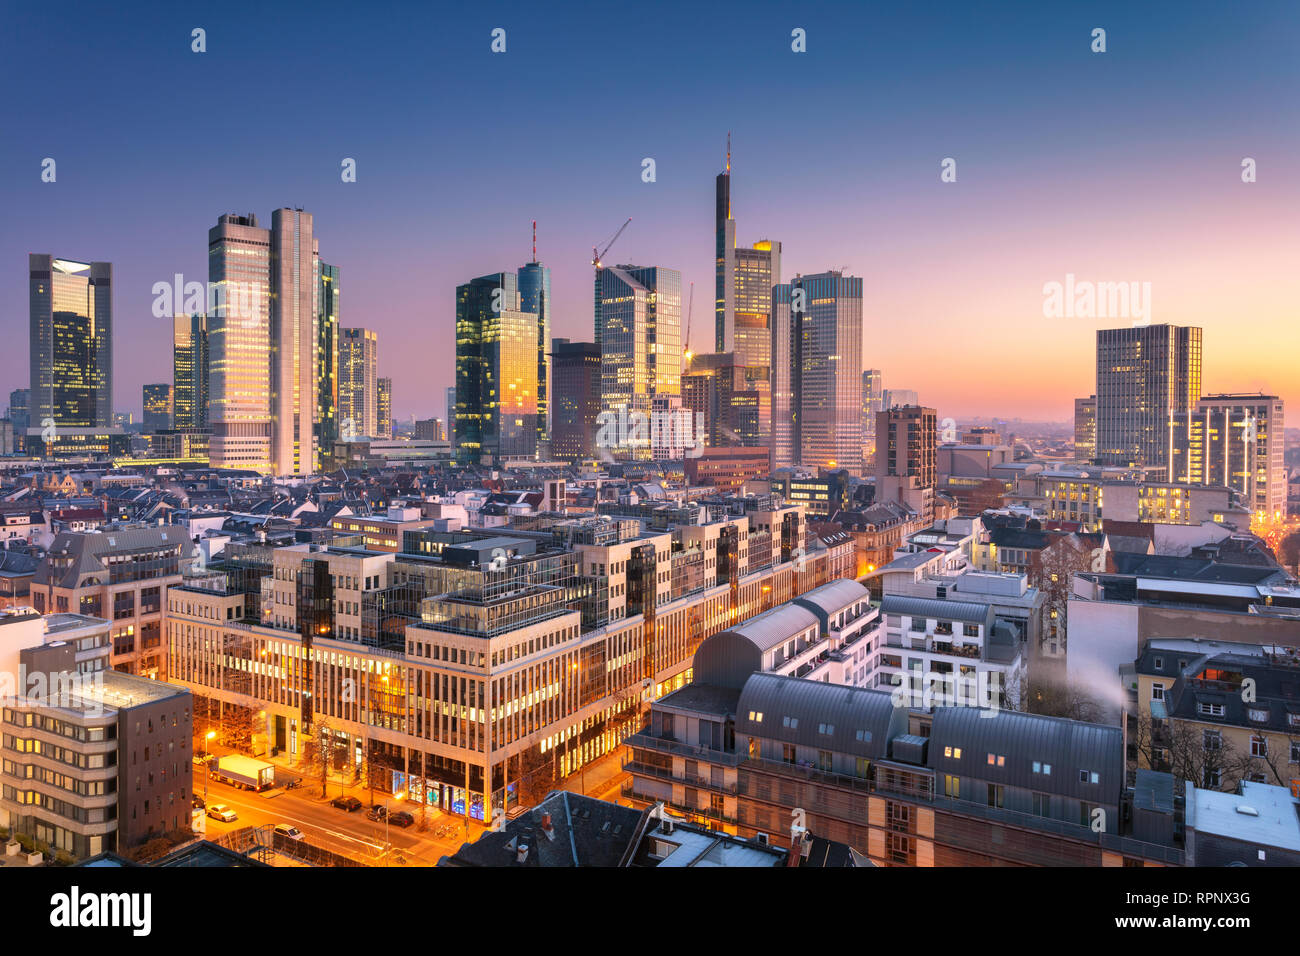 Frankfurt am Main, Germania. Antenna immagine cityscape di Frankfurt am Main skyline durante la bellissima alba. Foto Stock